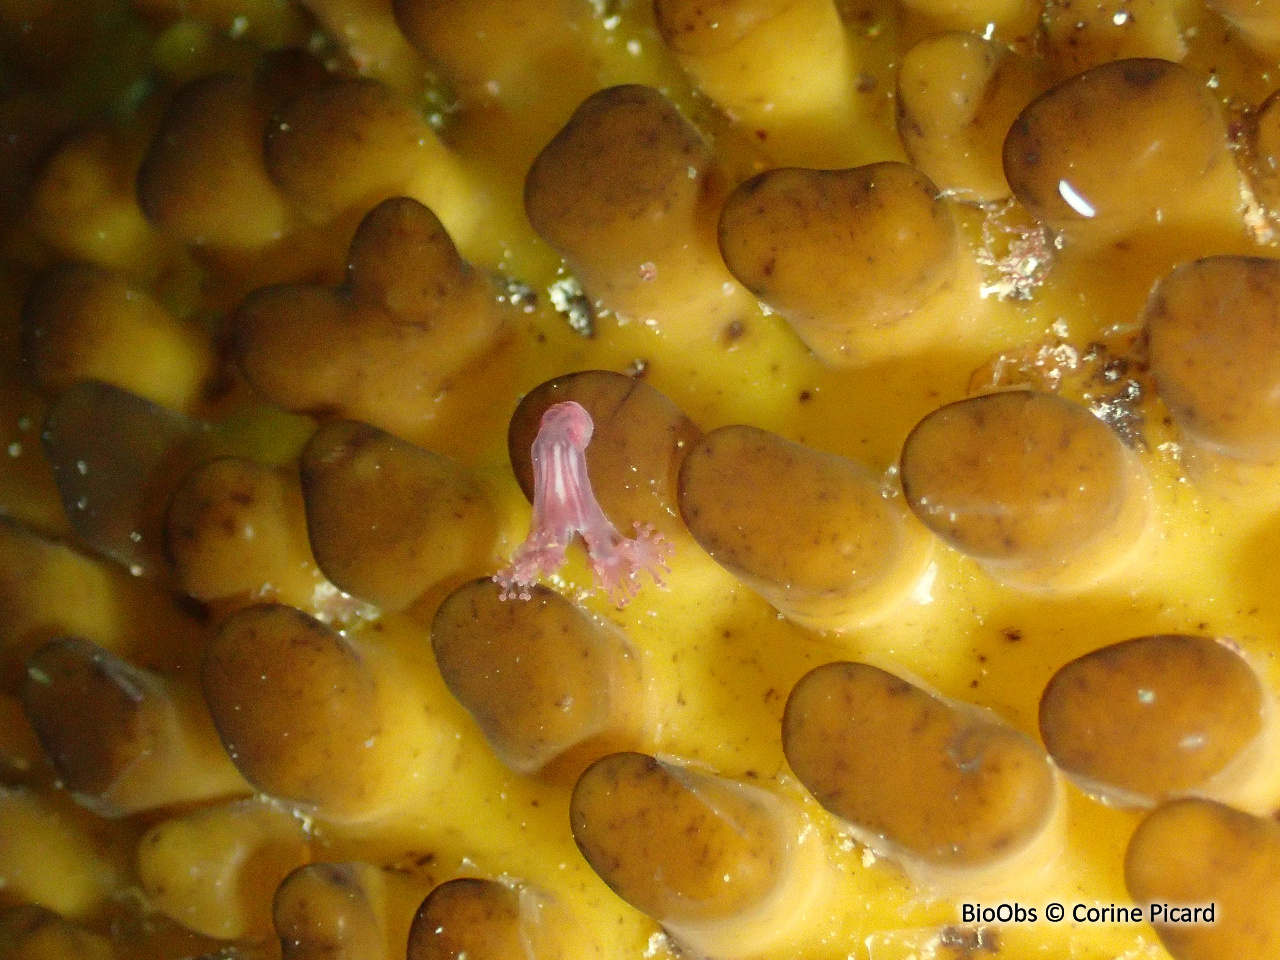 Petite lucernaire à boutons - Haliclystus octoradiatus - Corine Picard - BioObs